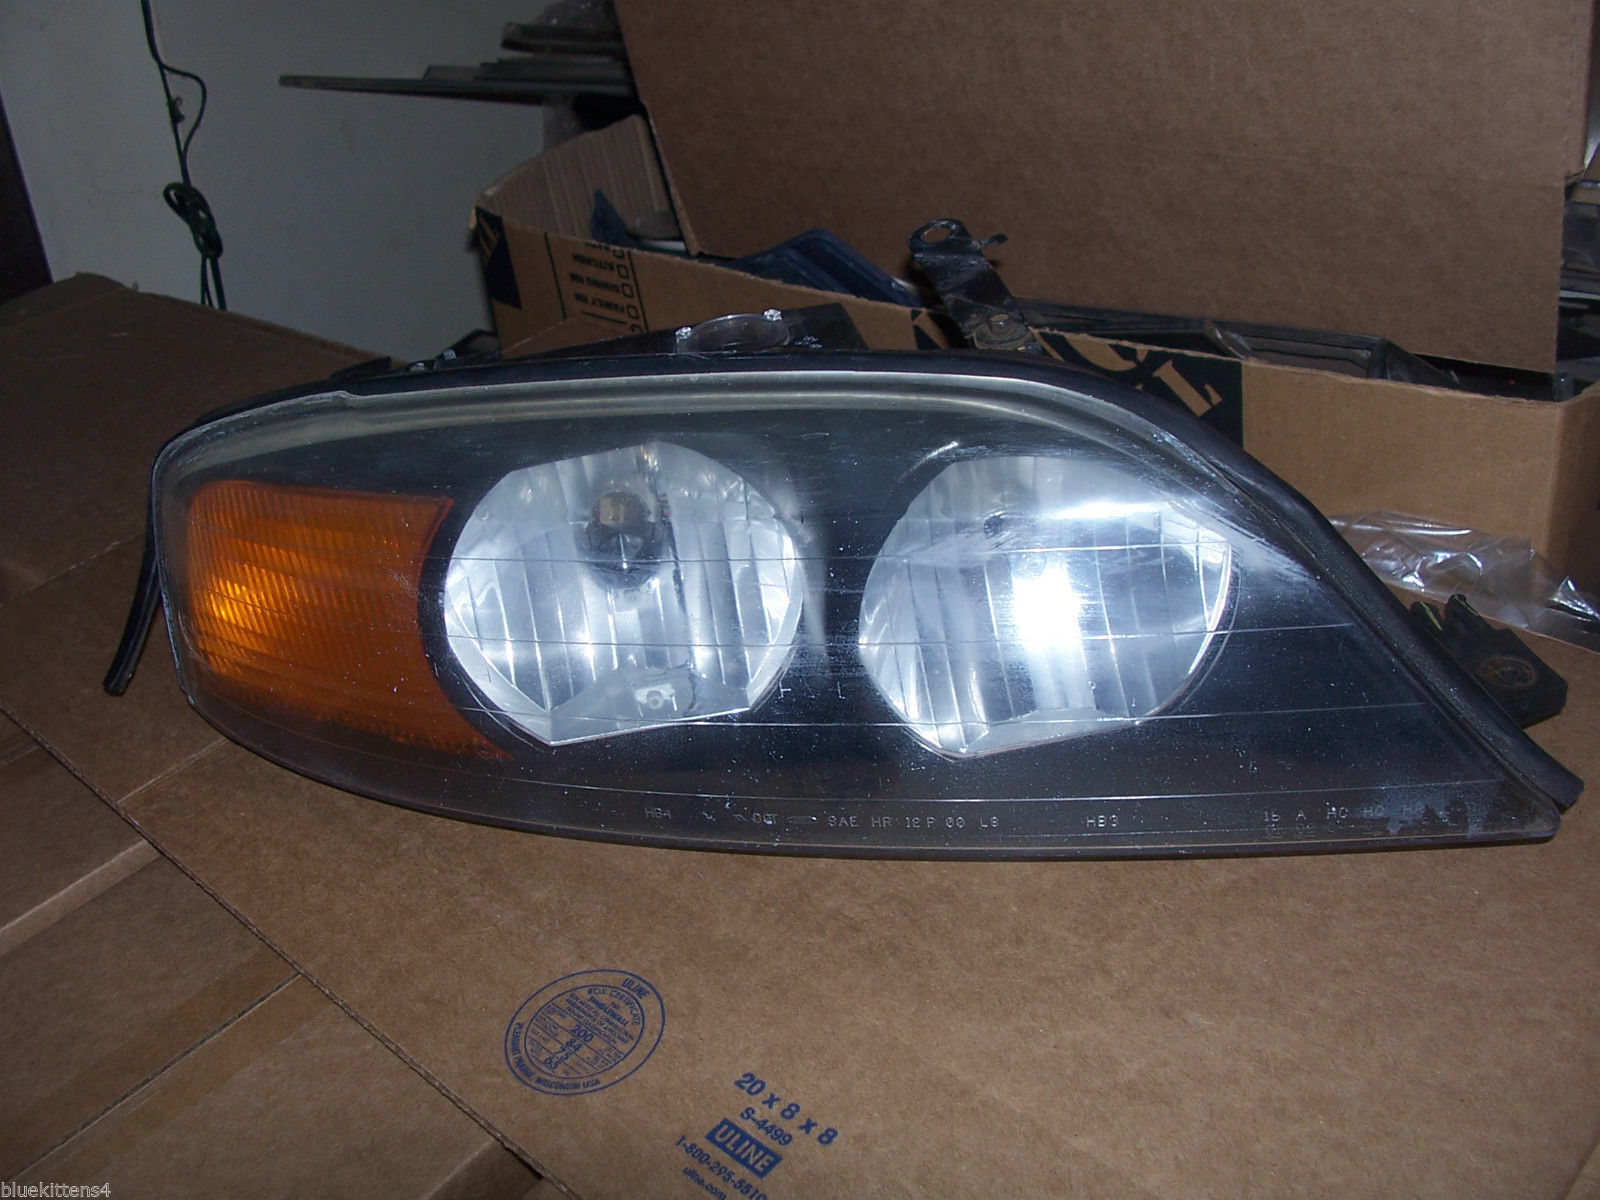 Headlight Headlamp Passenger Side Right RH NEW for 00-02 Lincoln LS